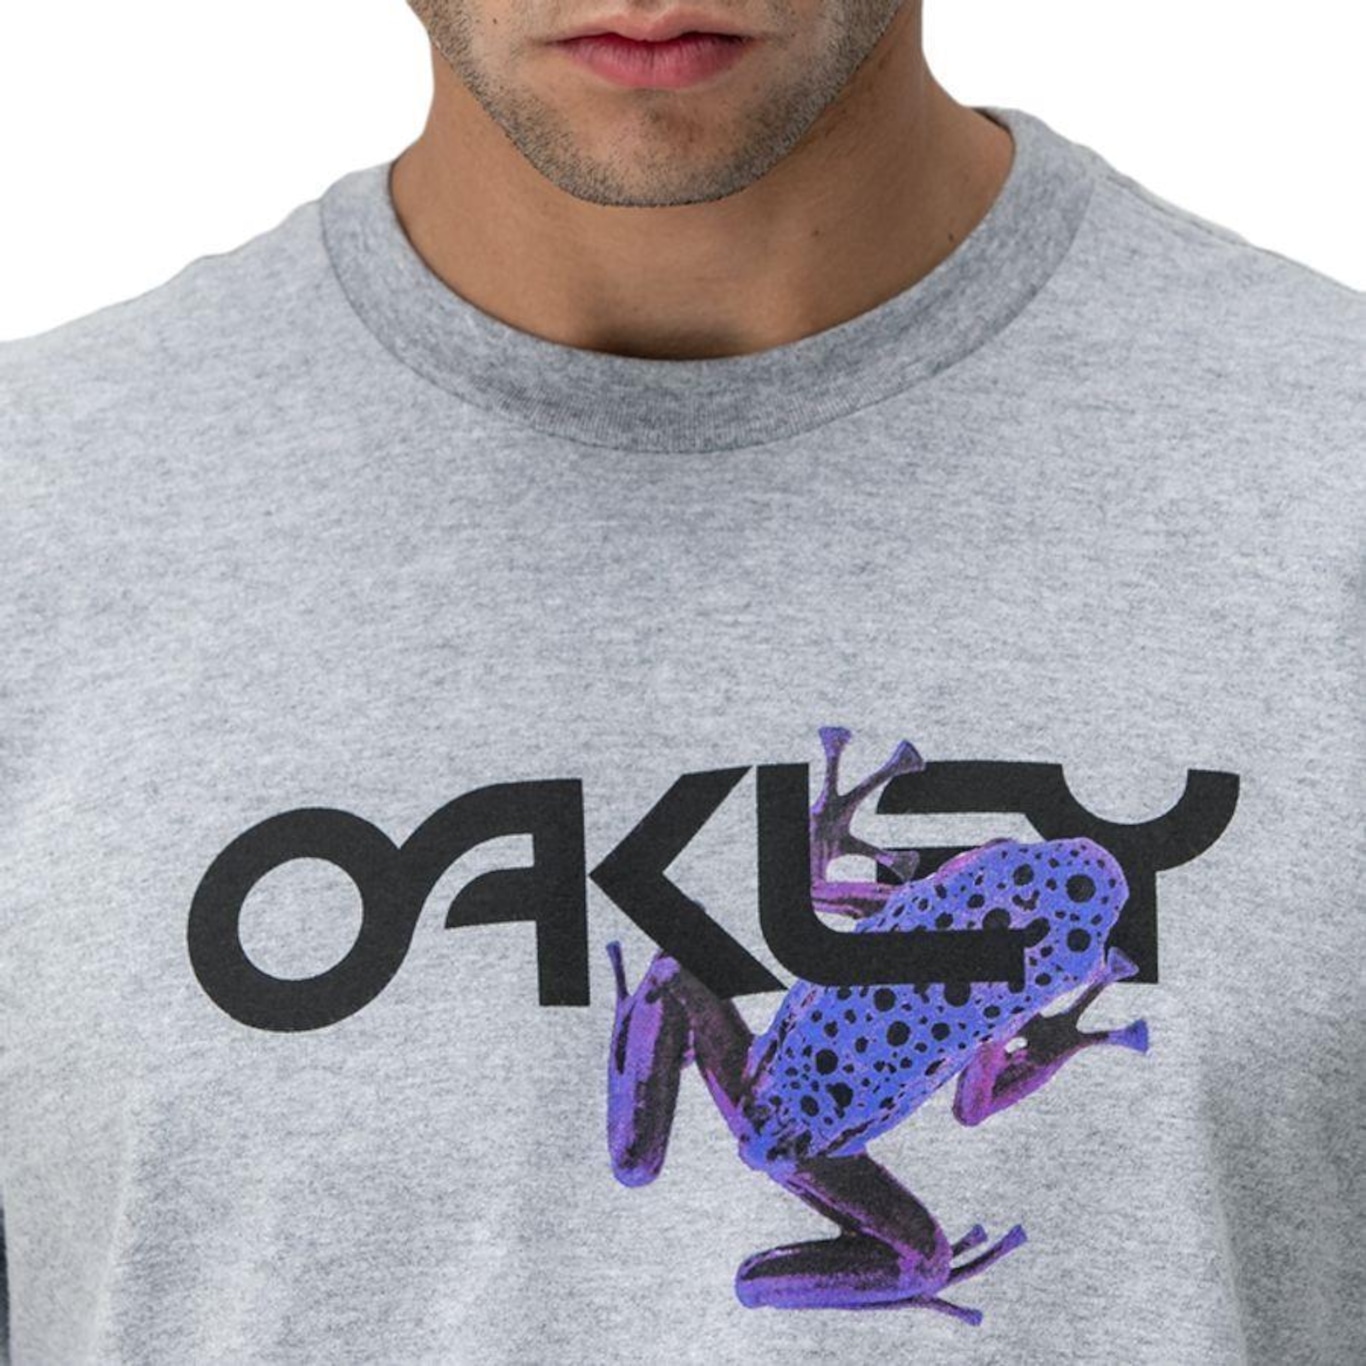 Camiseta Masculina Oakley Frog Graphic Tee - overboard